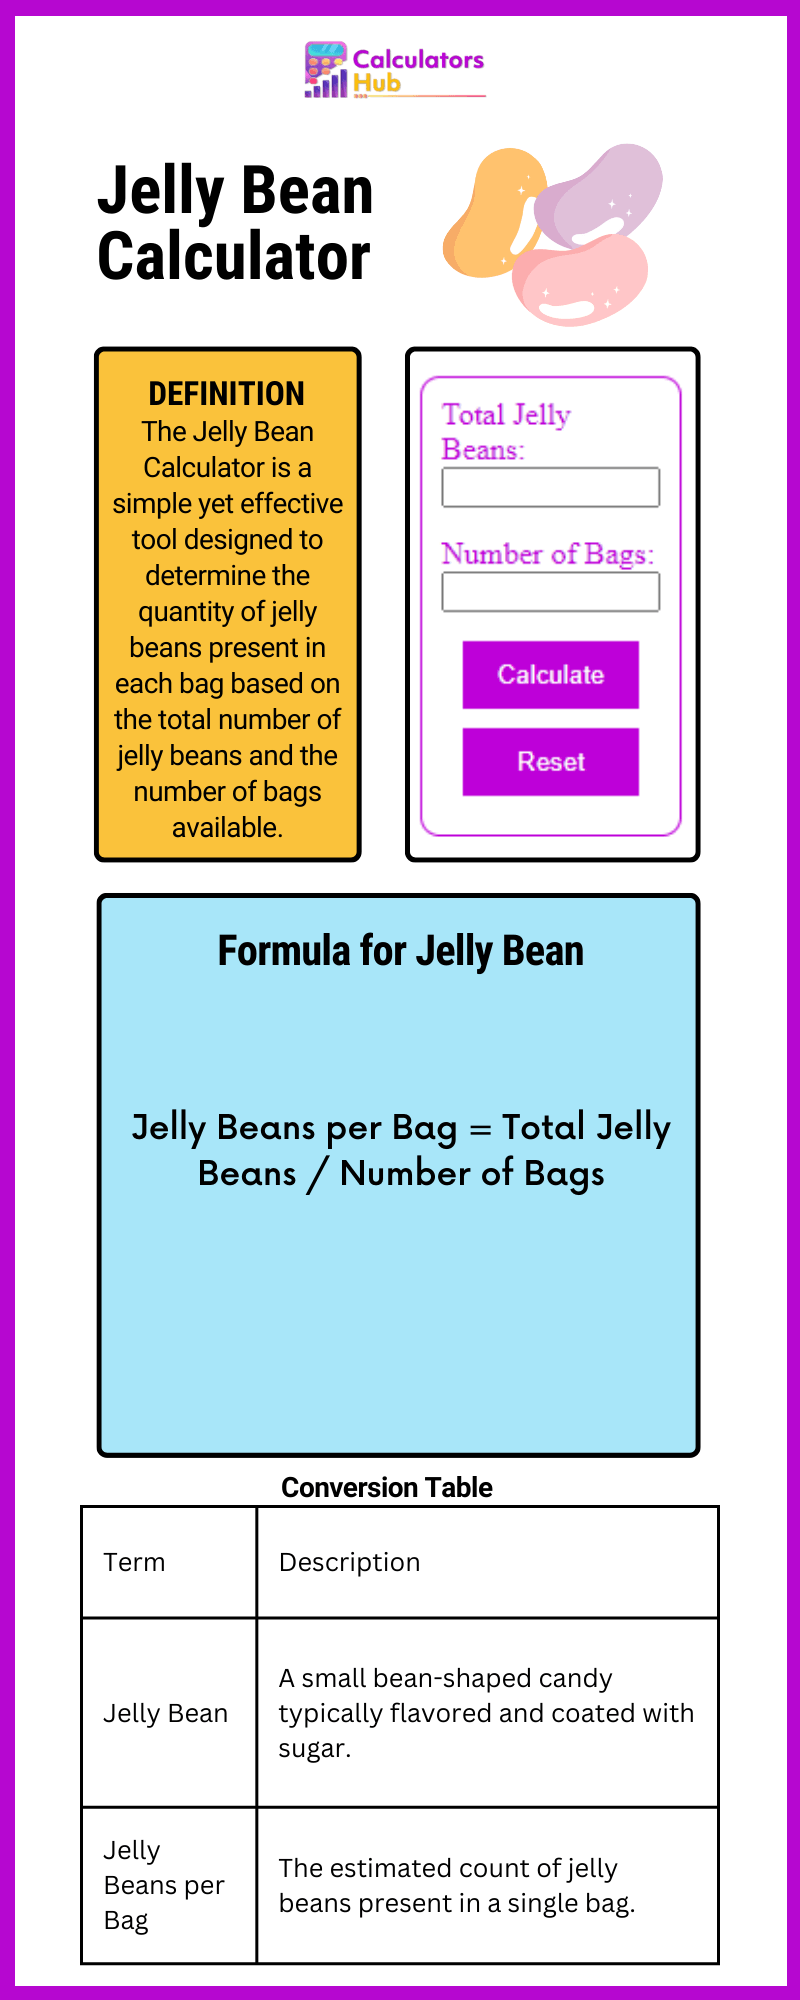 Jelly Bean Calculator